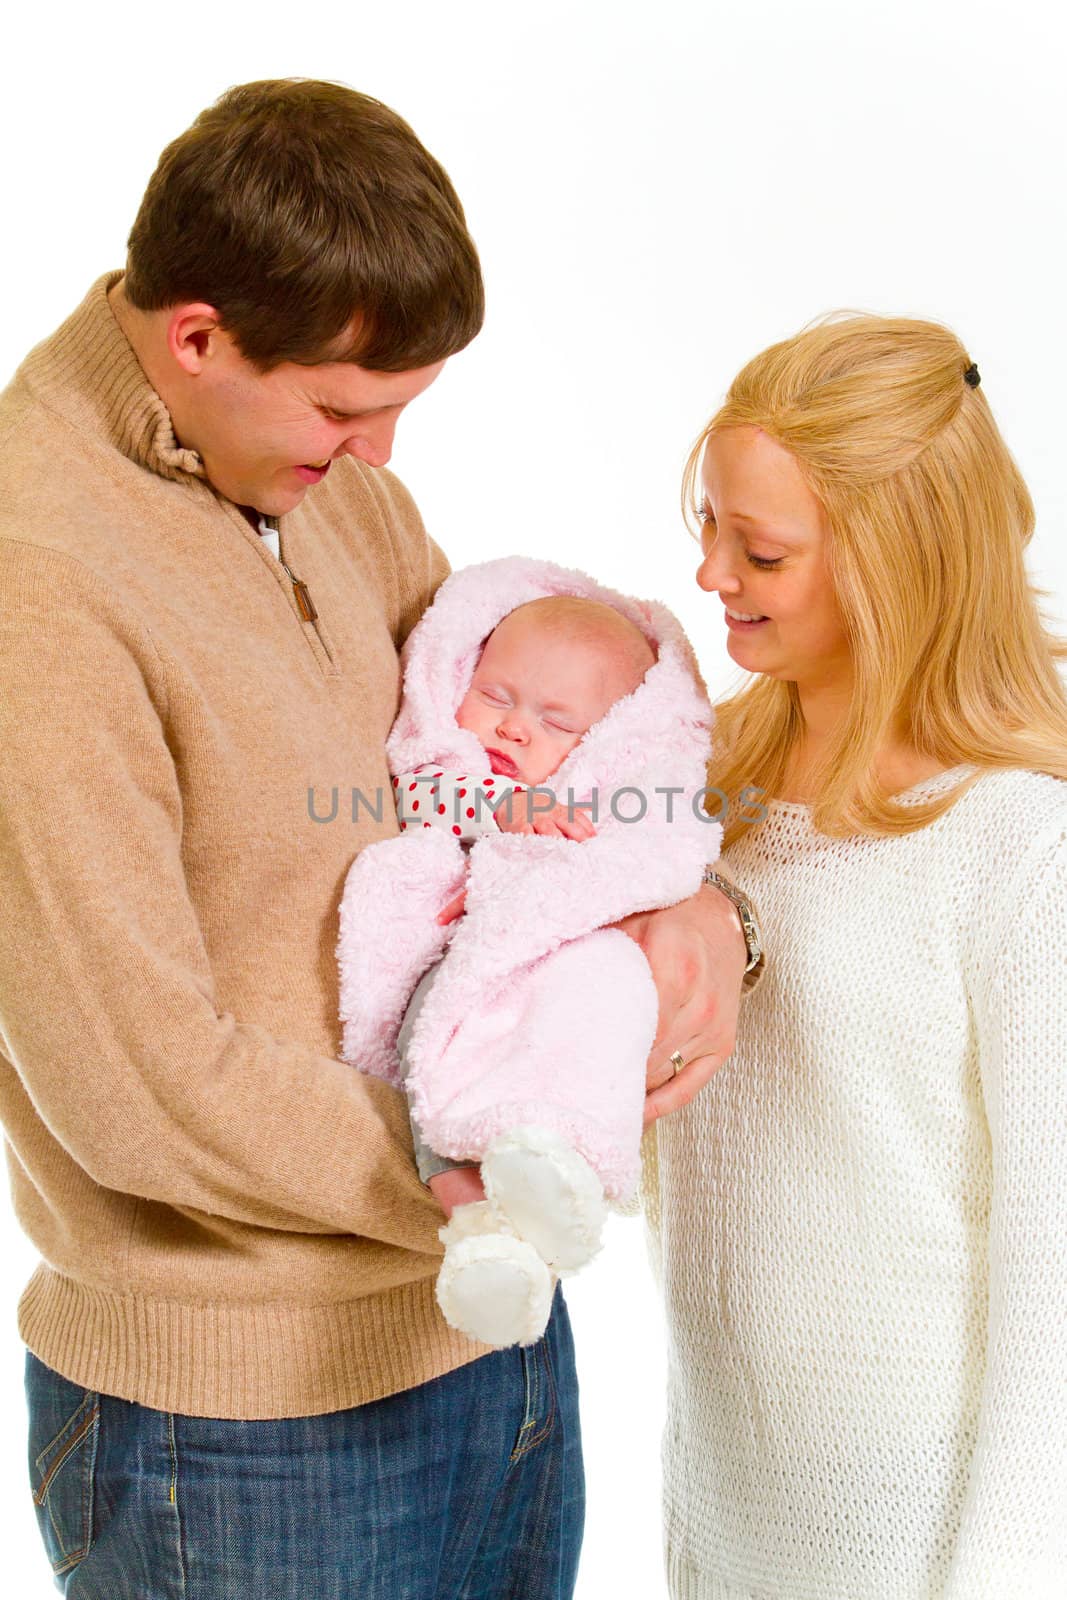 Newborn Baby and Family by joshuaraineyphotography